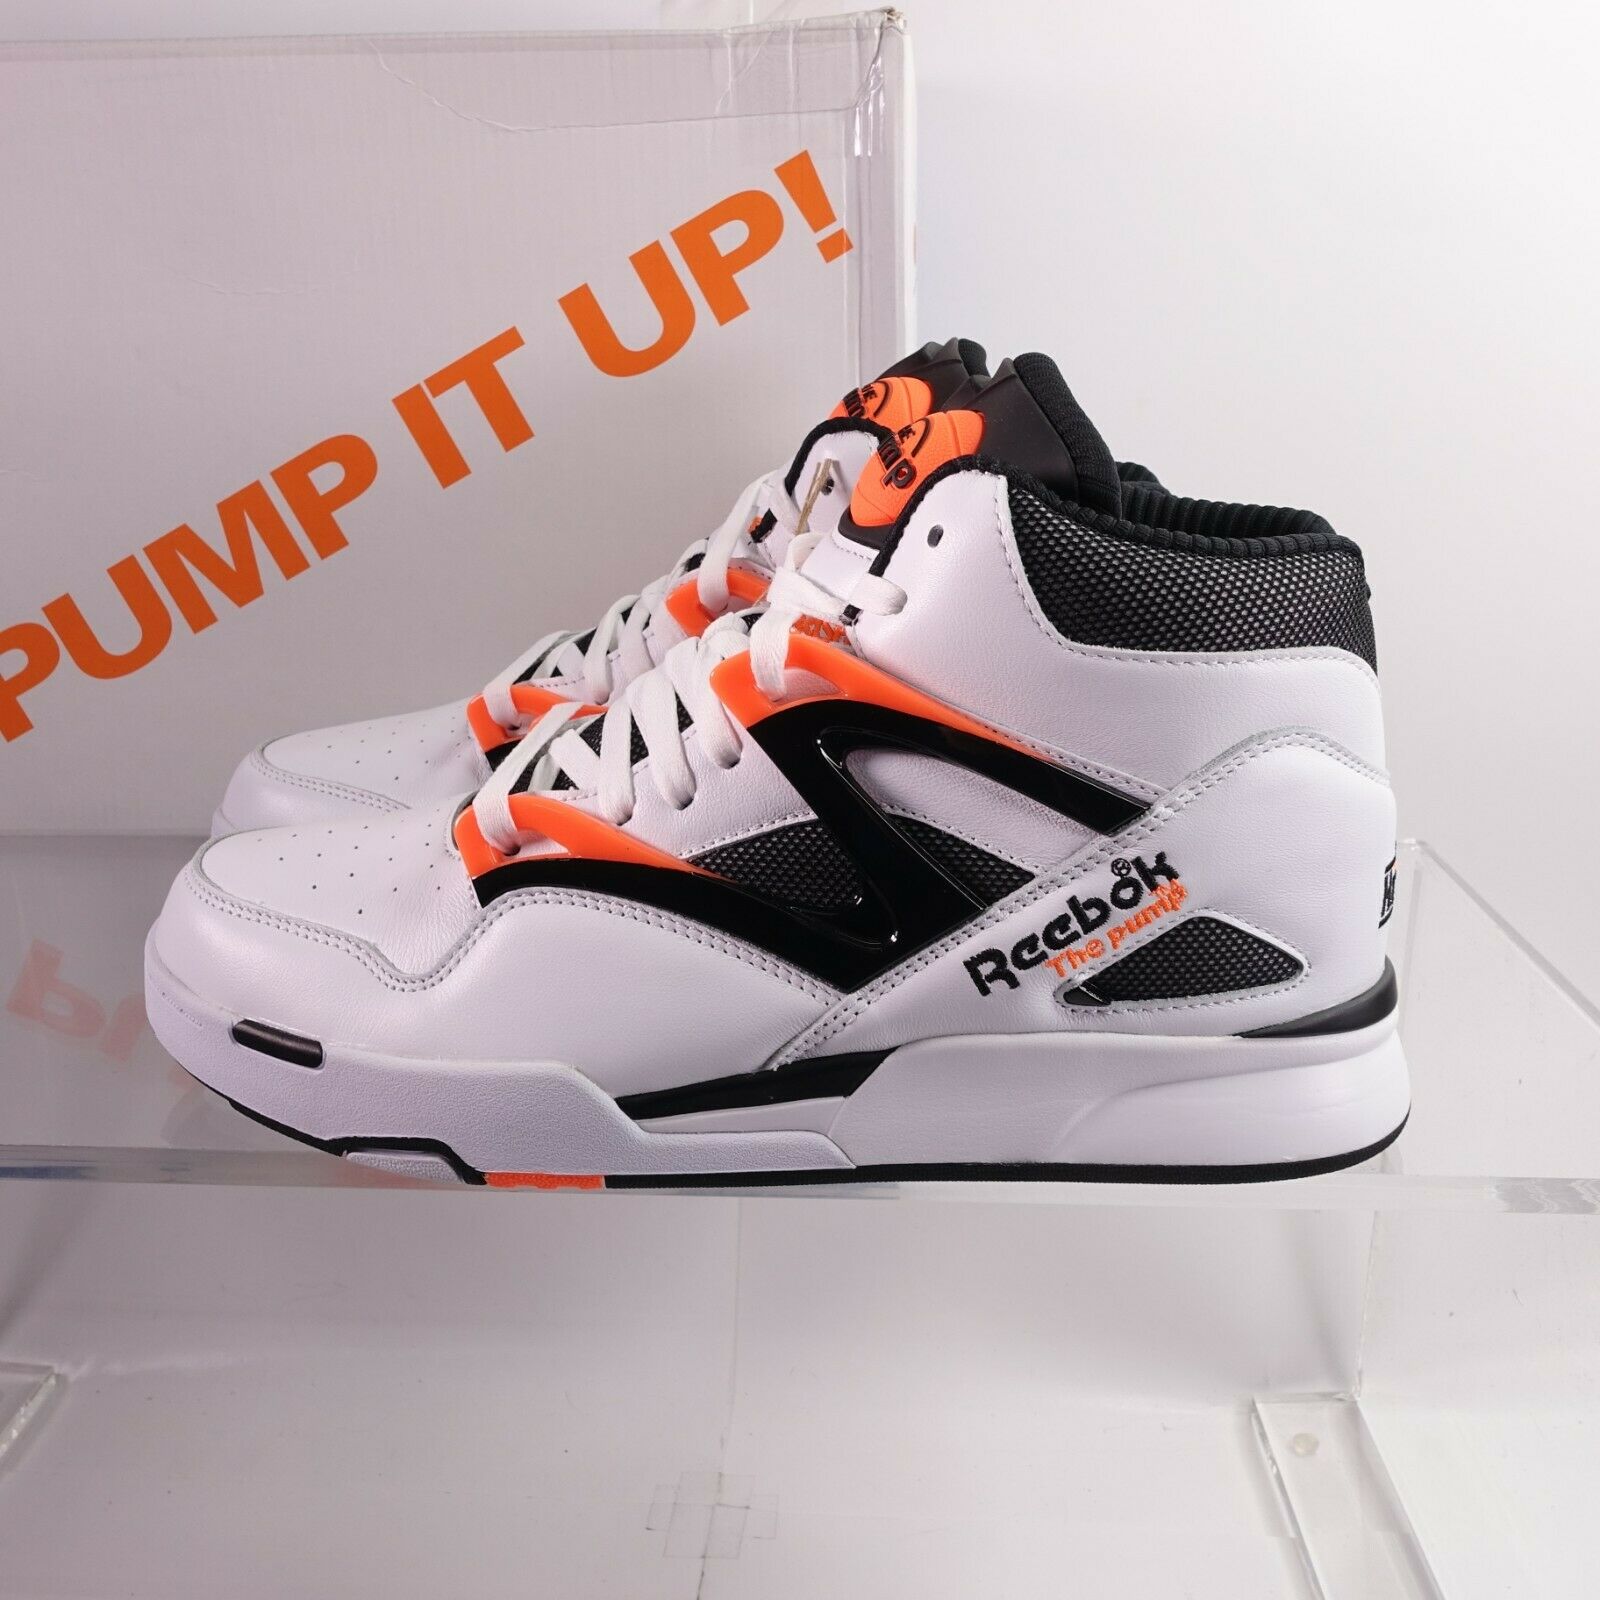 Size 10 Men's Reebok Pump Omni Zone II Basketball Shoes G57540 White/Orange